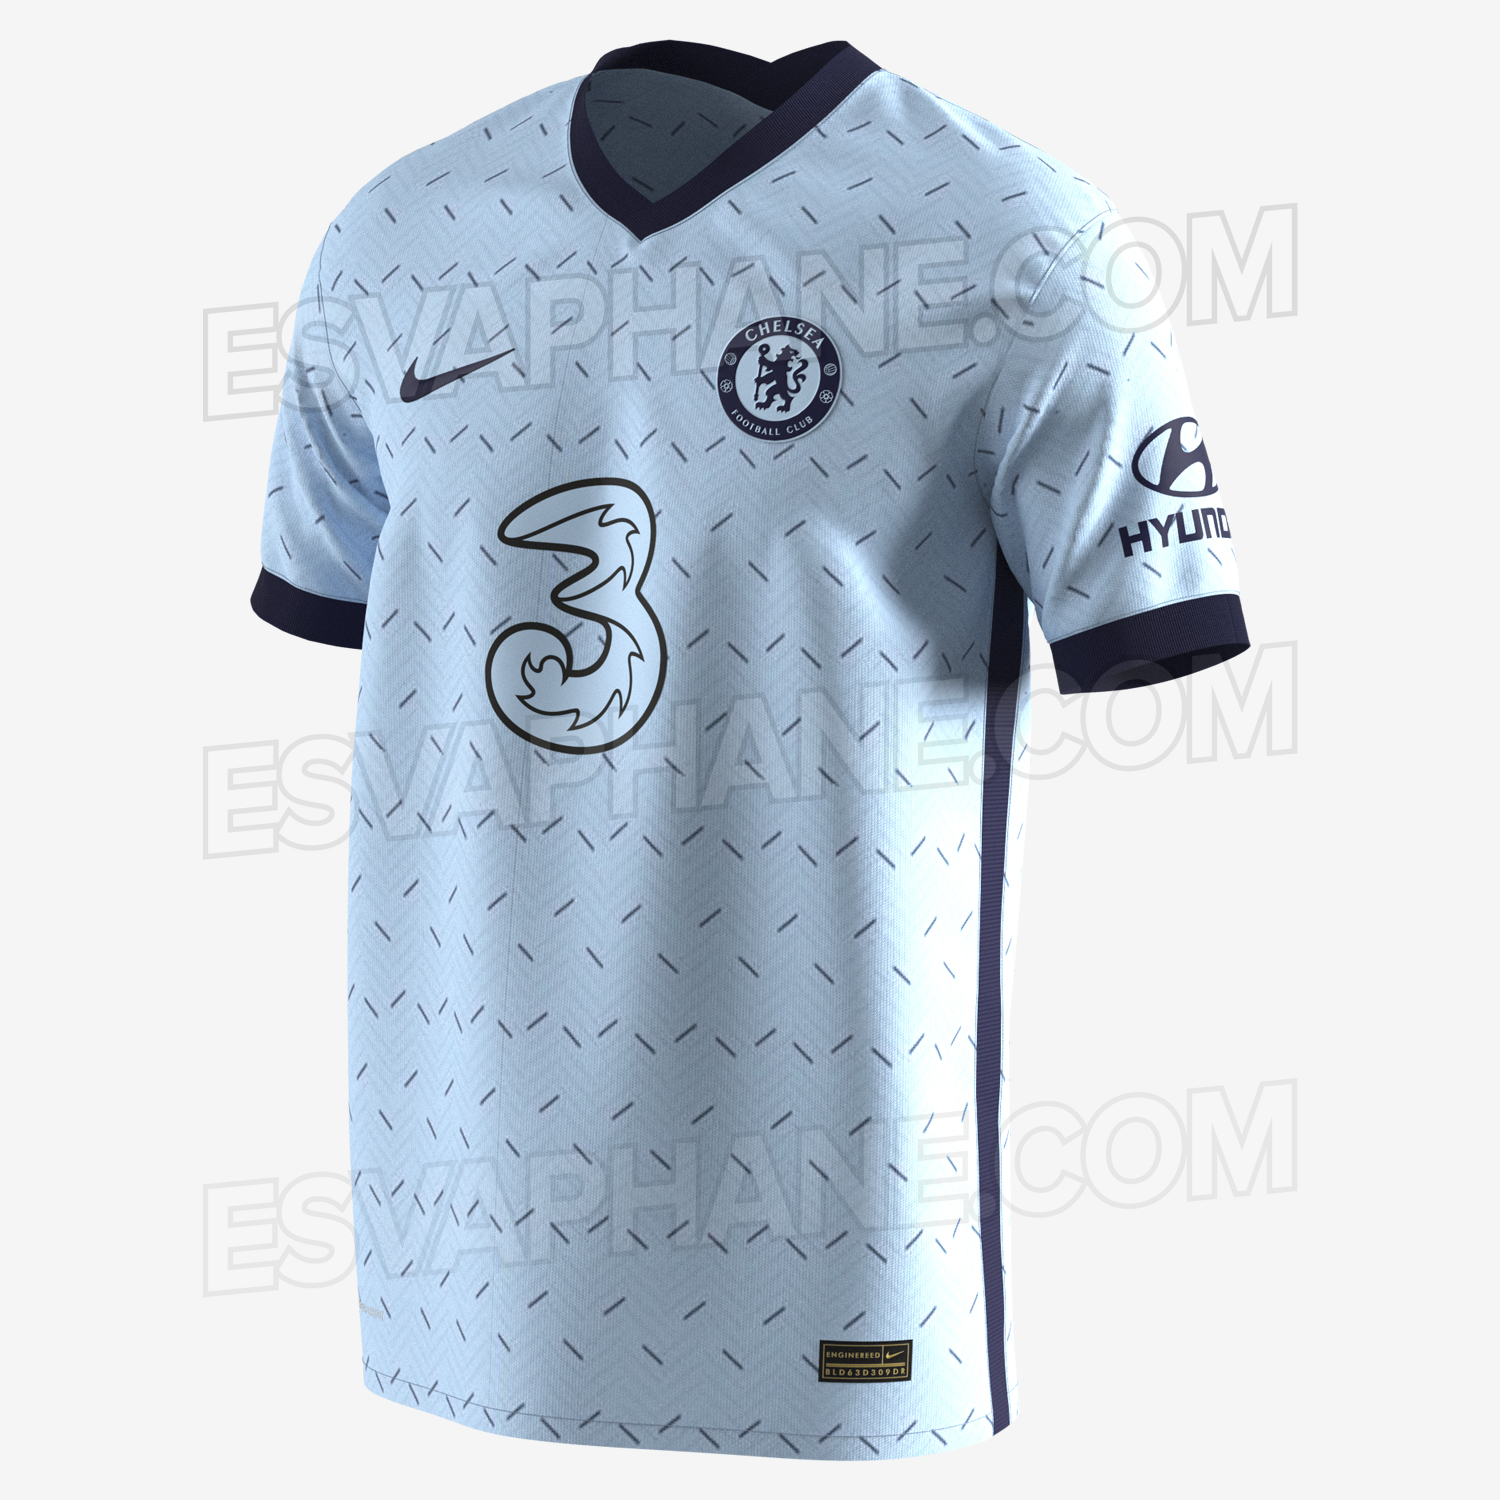 Chelsea 2021 maillot exterieur footbal Nike